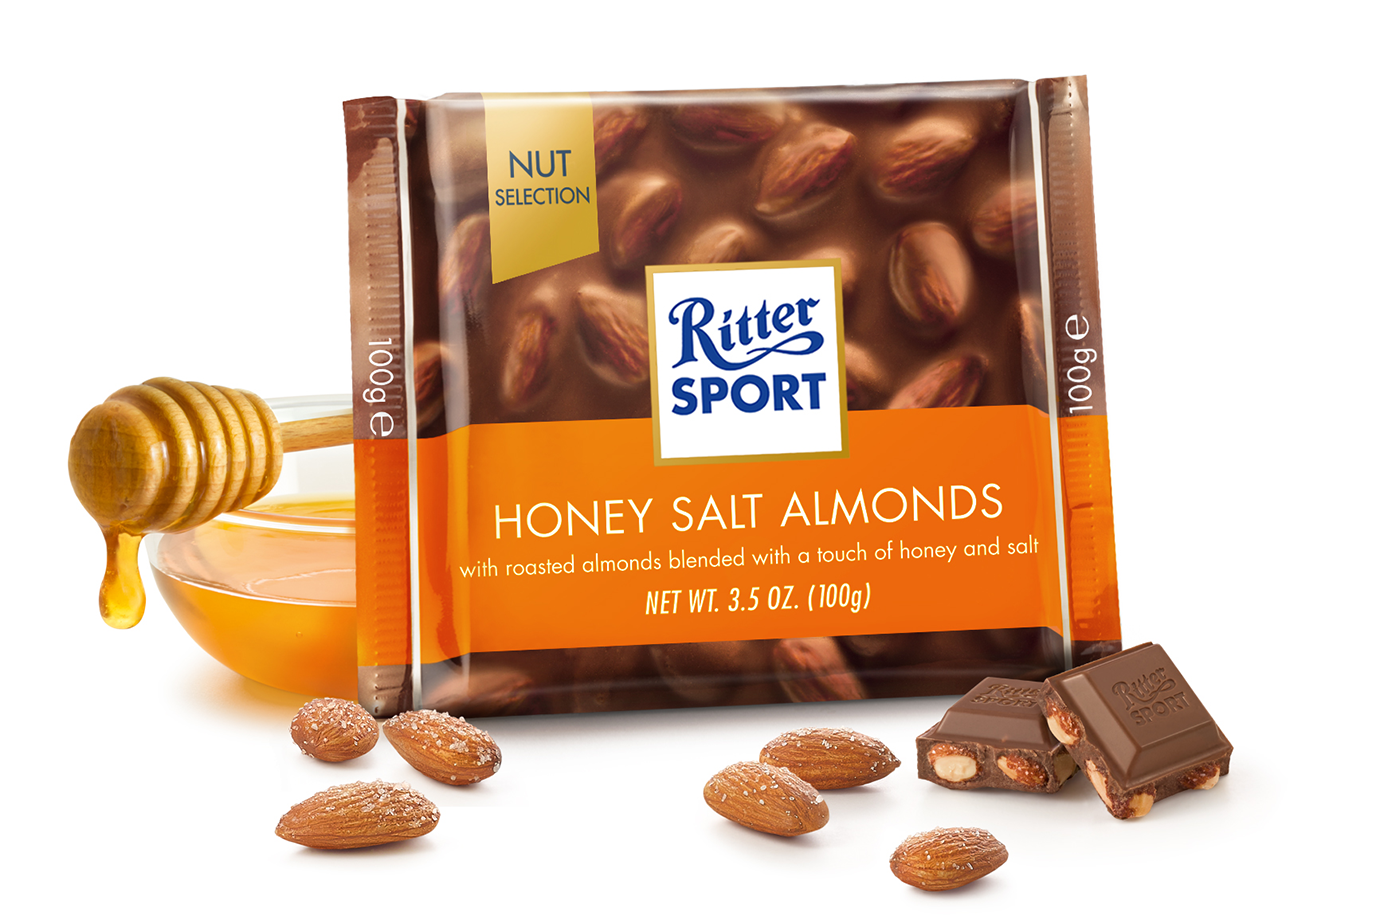 Ritter Honey Salted Almond Chocolate 100g